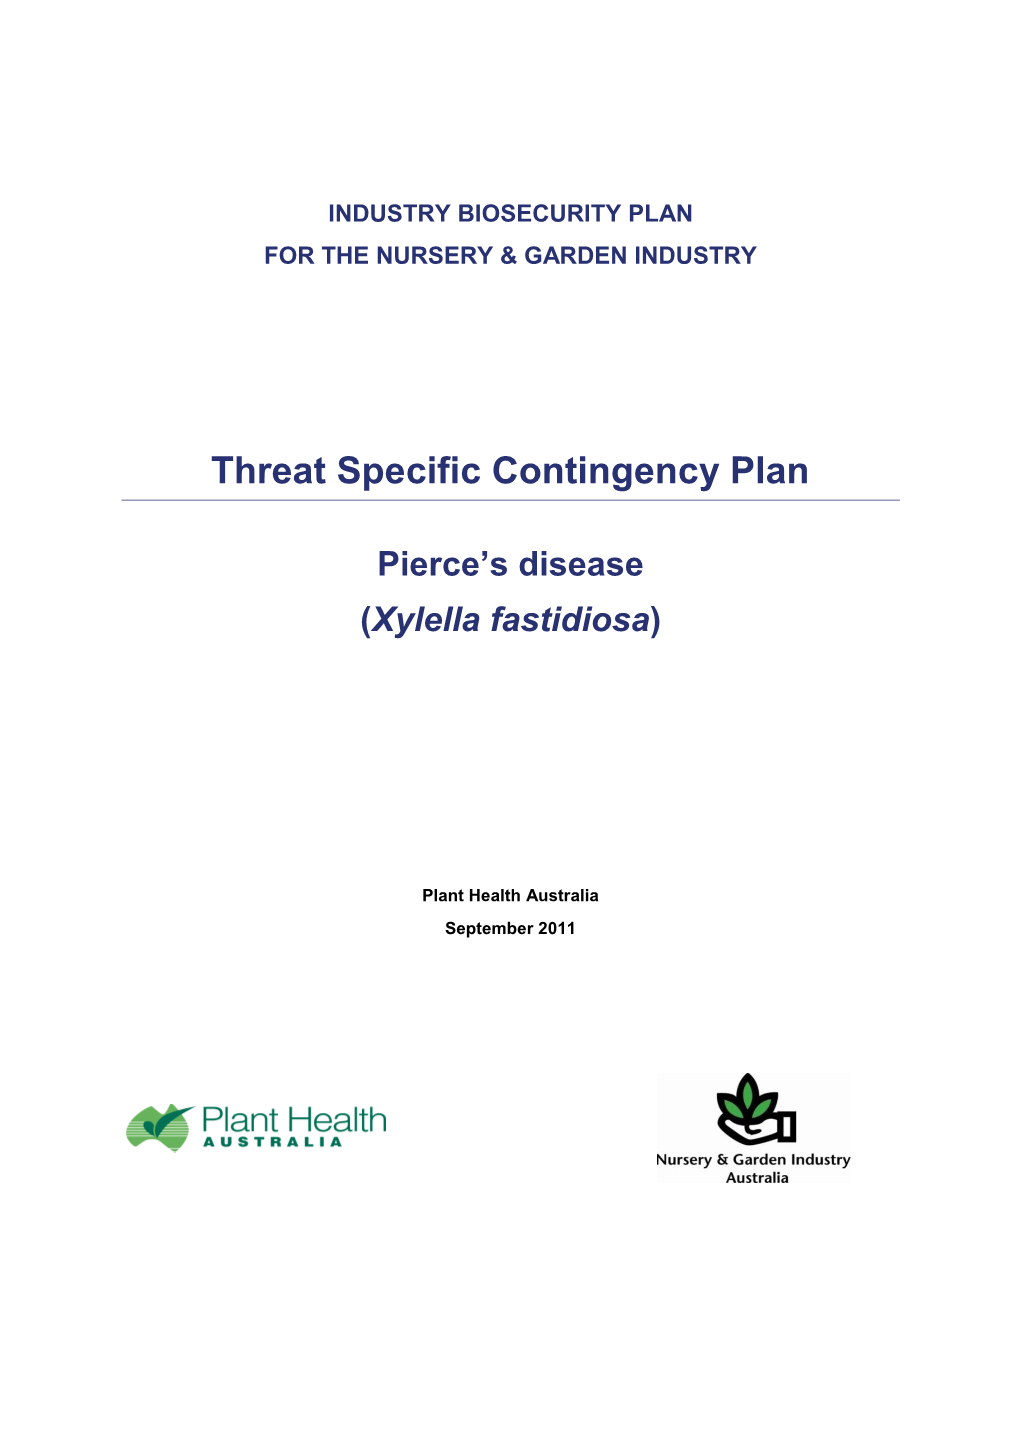 Threat Specific Contingency Plan: Pierce's Disease (Xylella Fastidiosa)